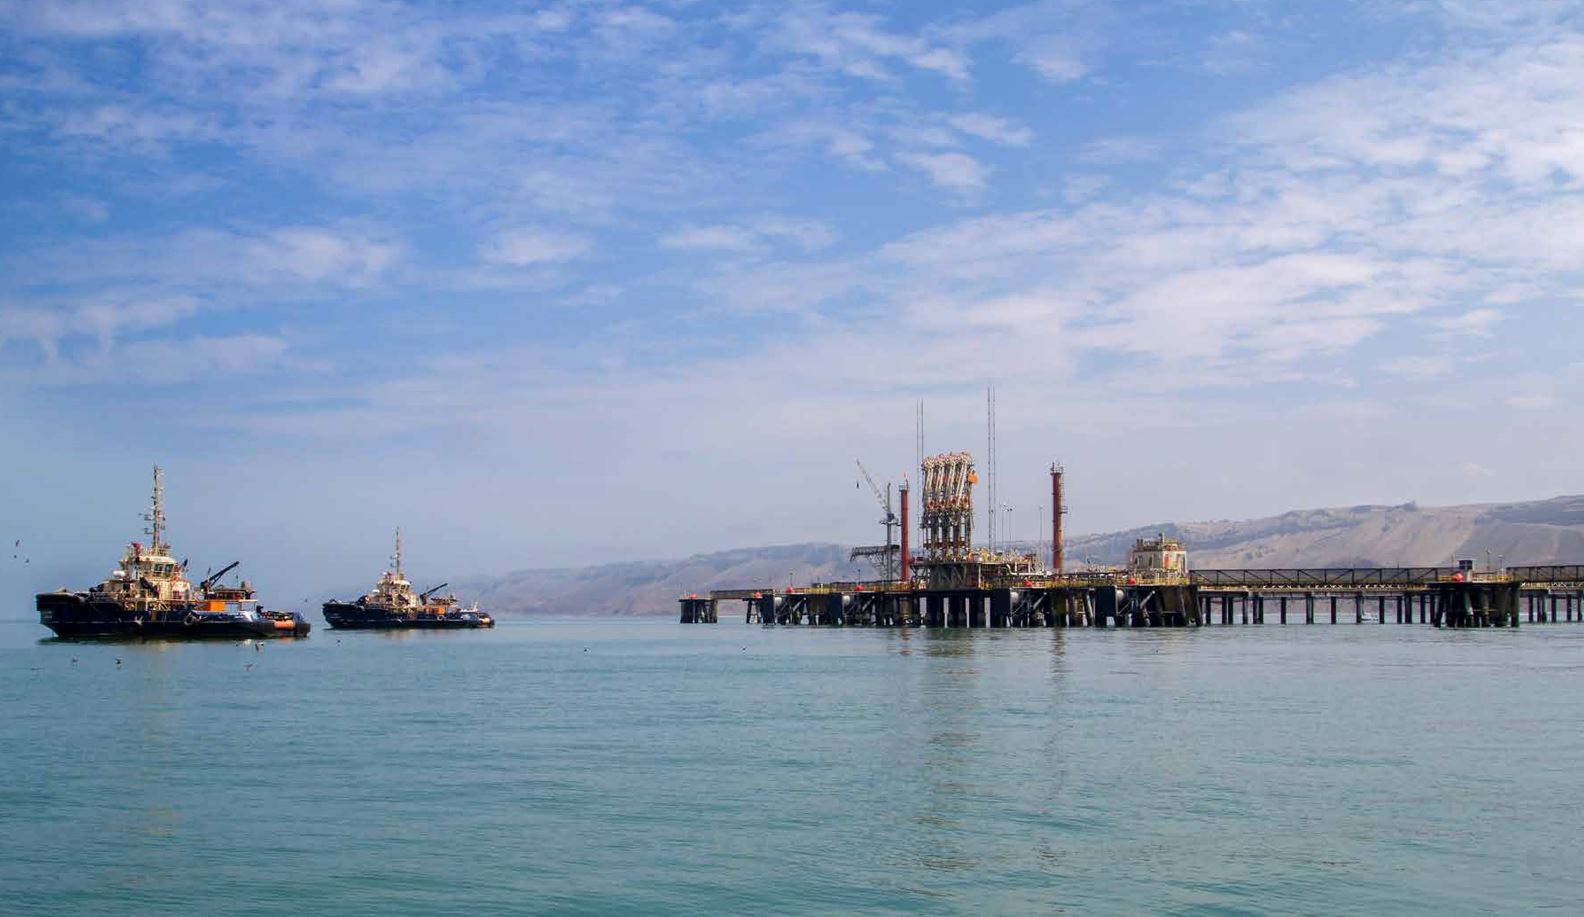 Peru LNG shipped six cargoes in January